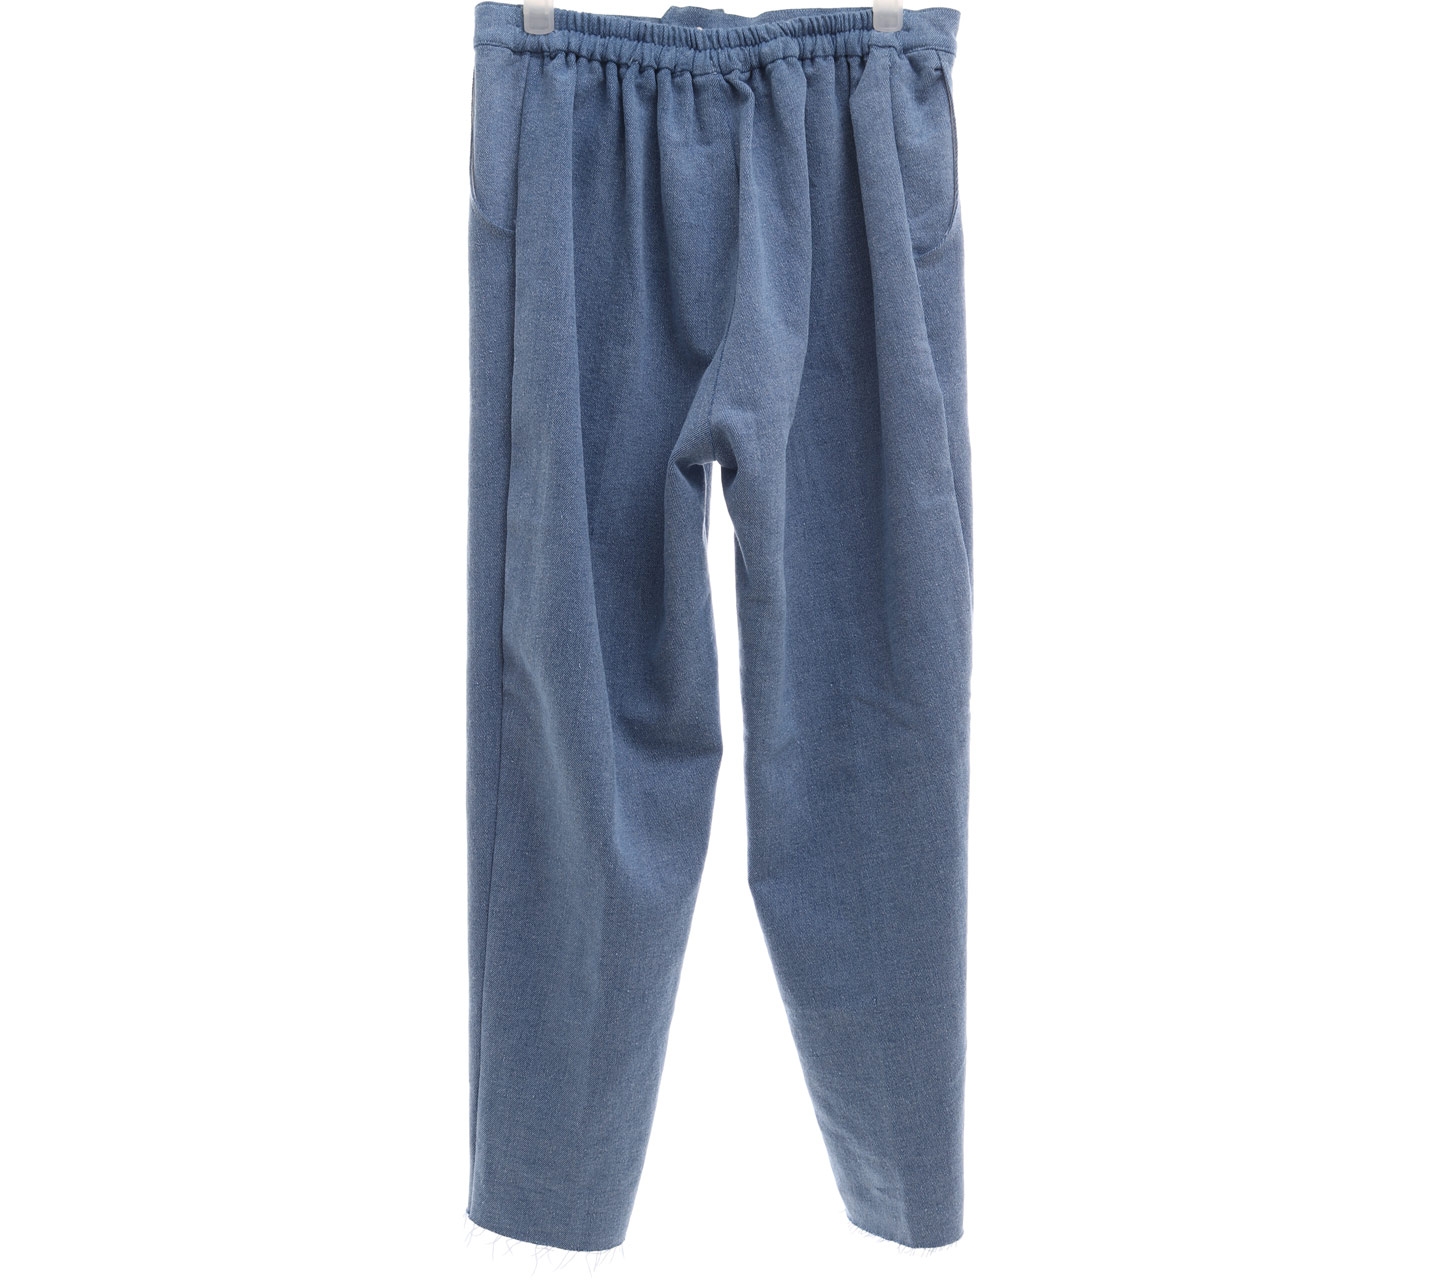 Sunnyday Blue Denim Long pants